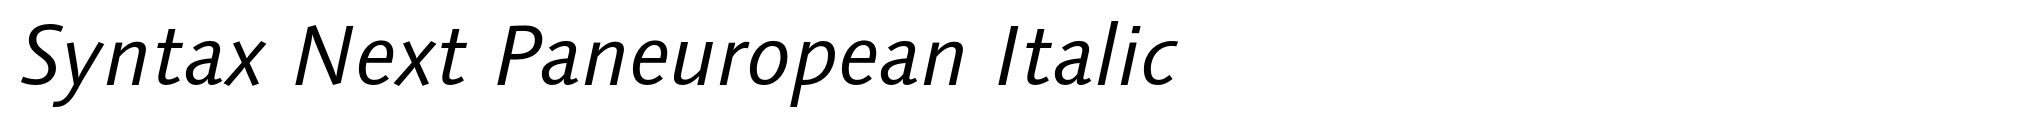 Syntax Next Paneuropean Italic image